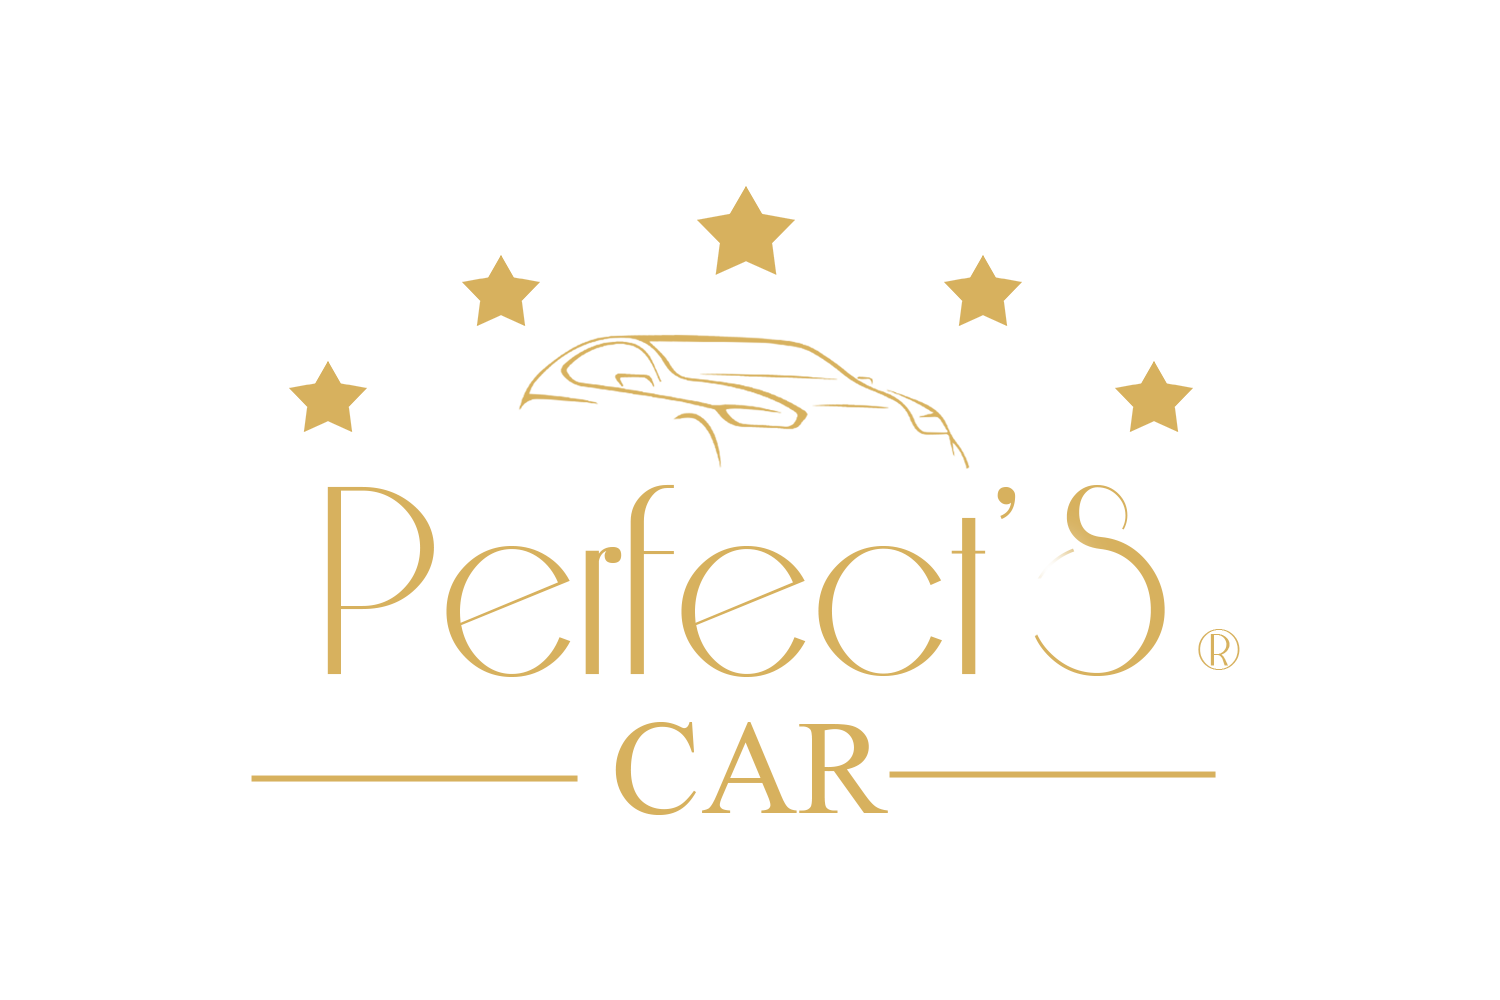 Perfect’s Car